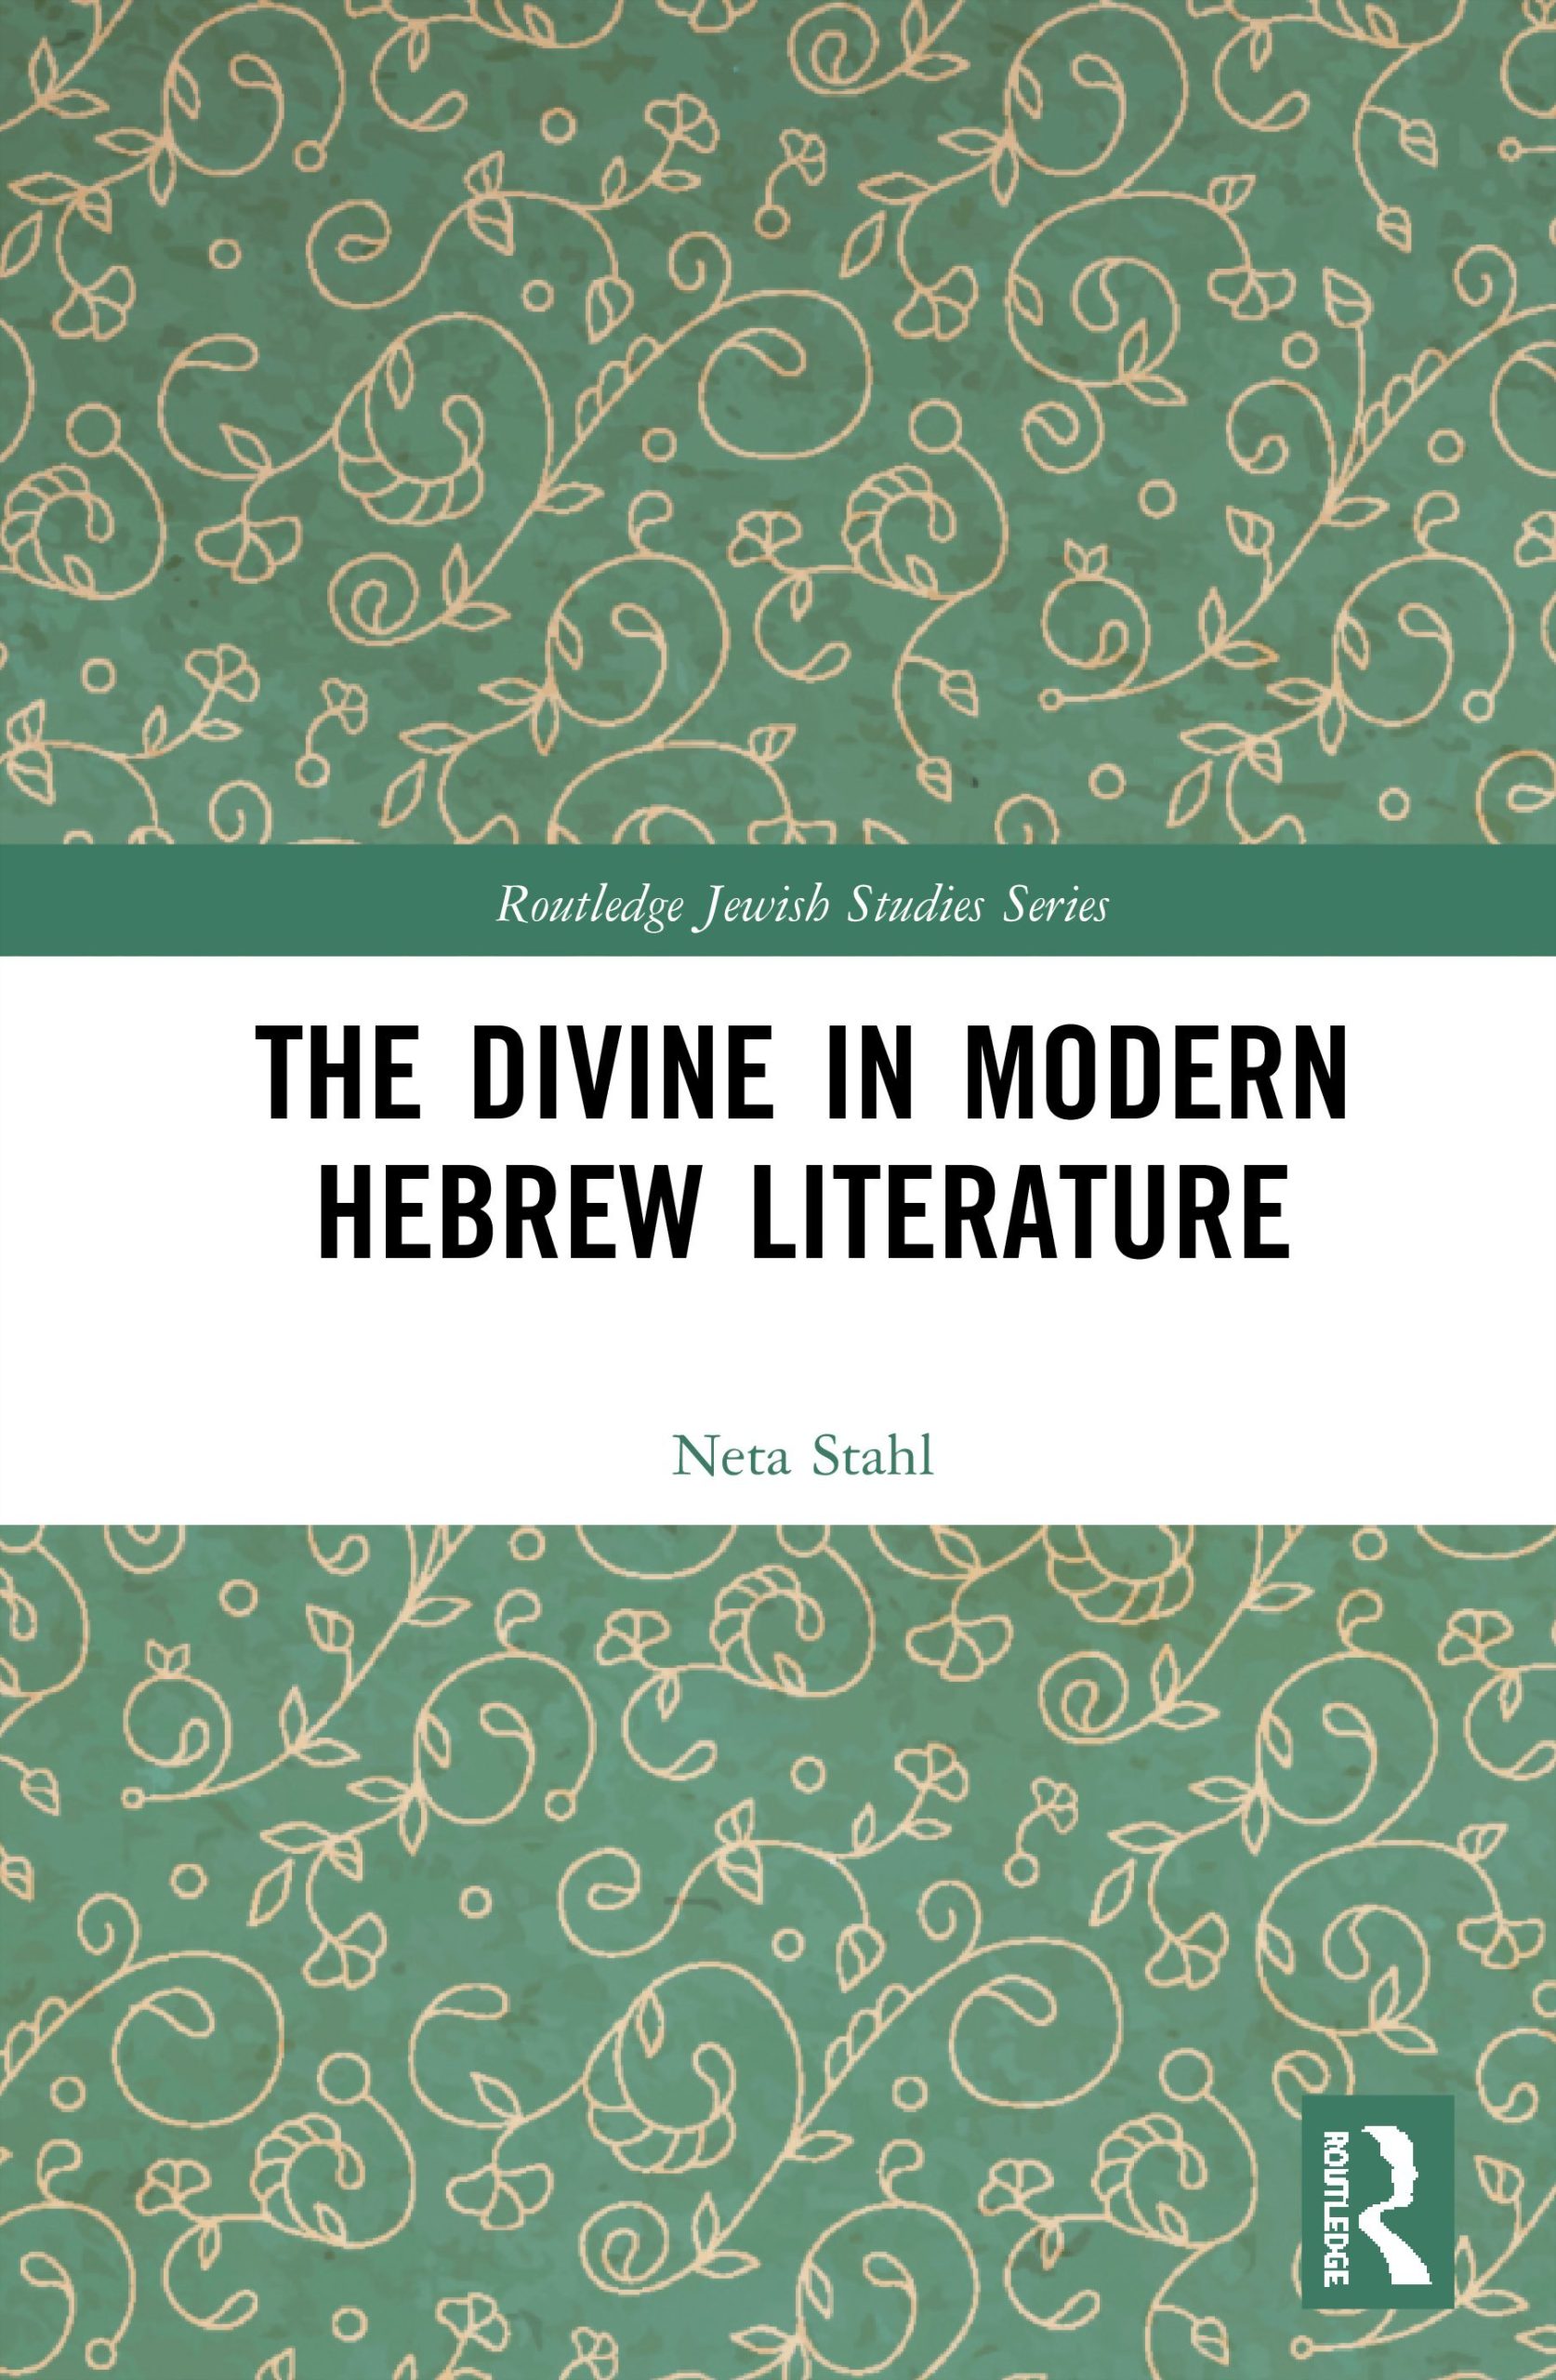 The Divine in Modern Hebrew Literature by Professor Neta Stahl